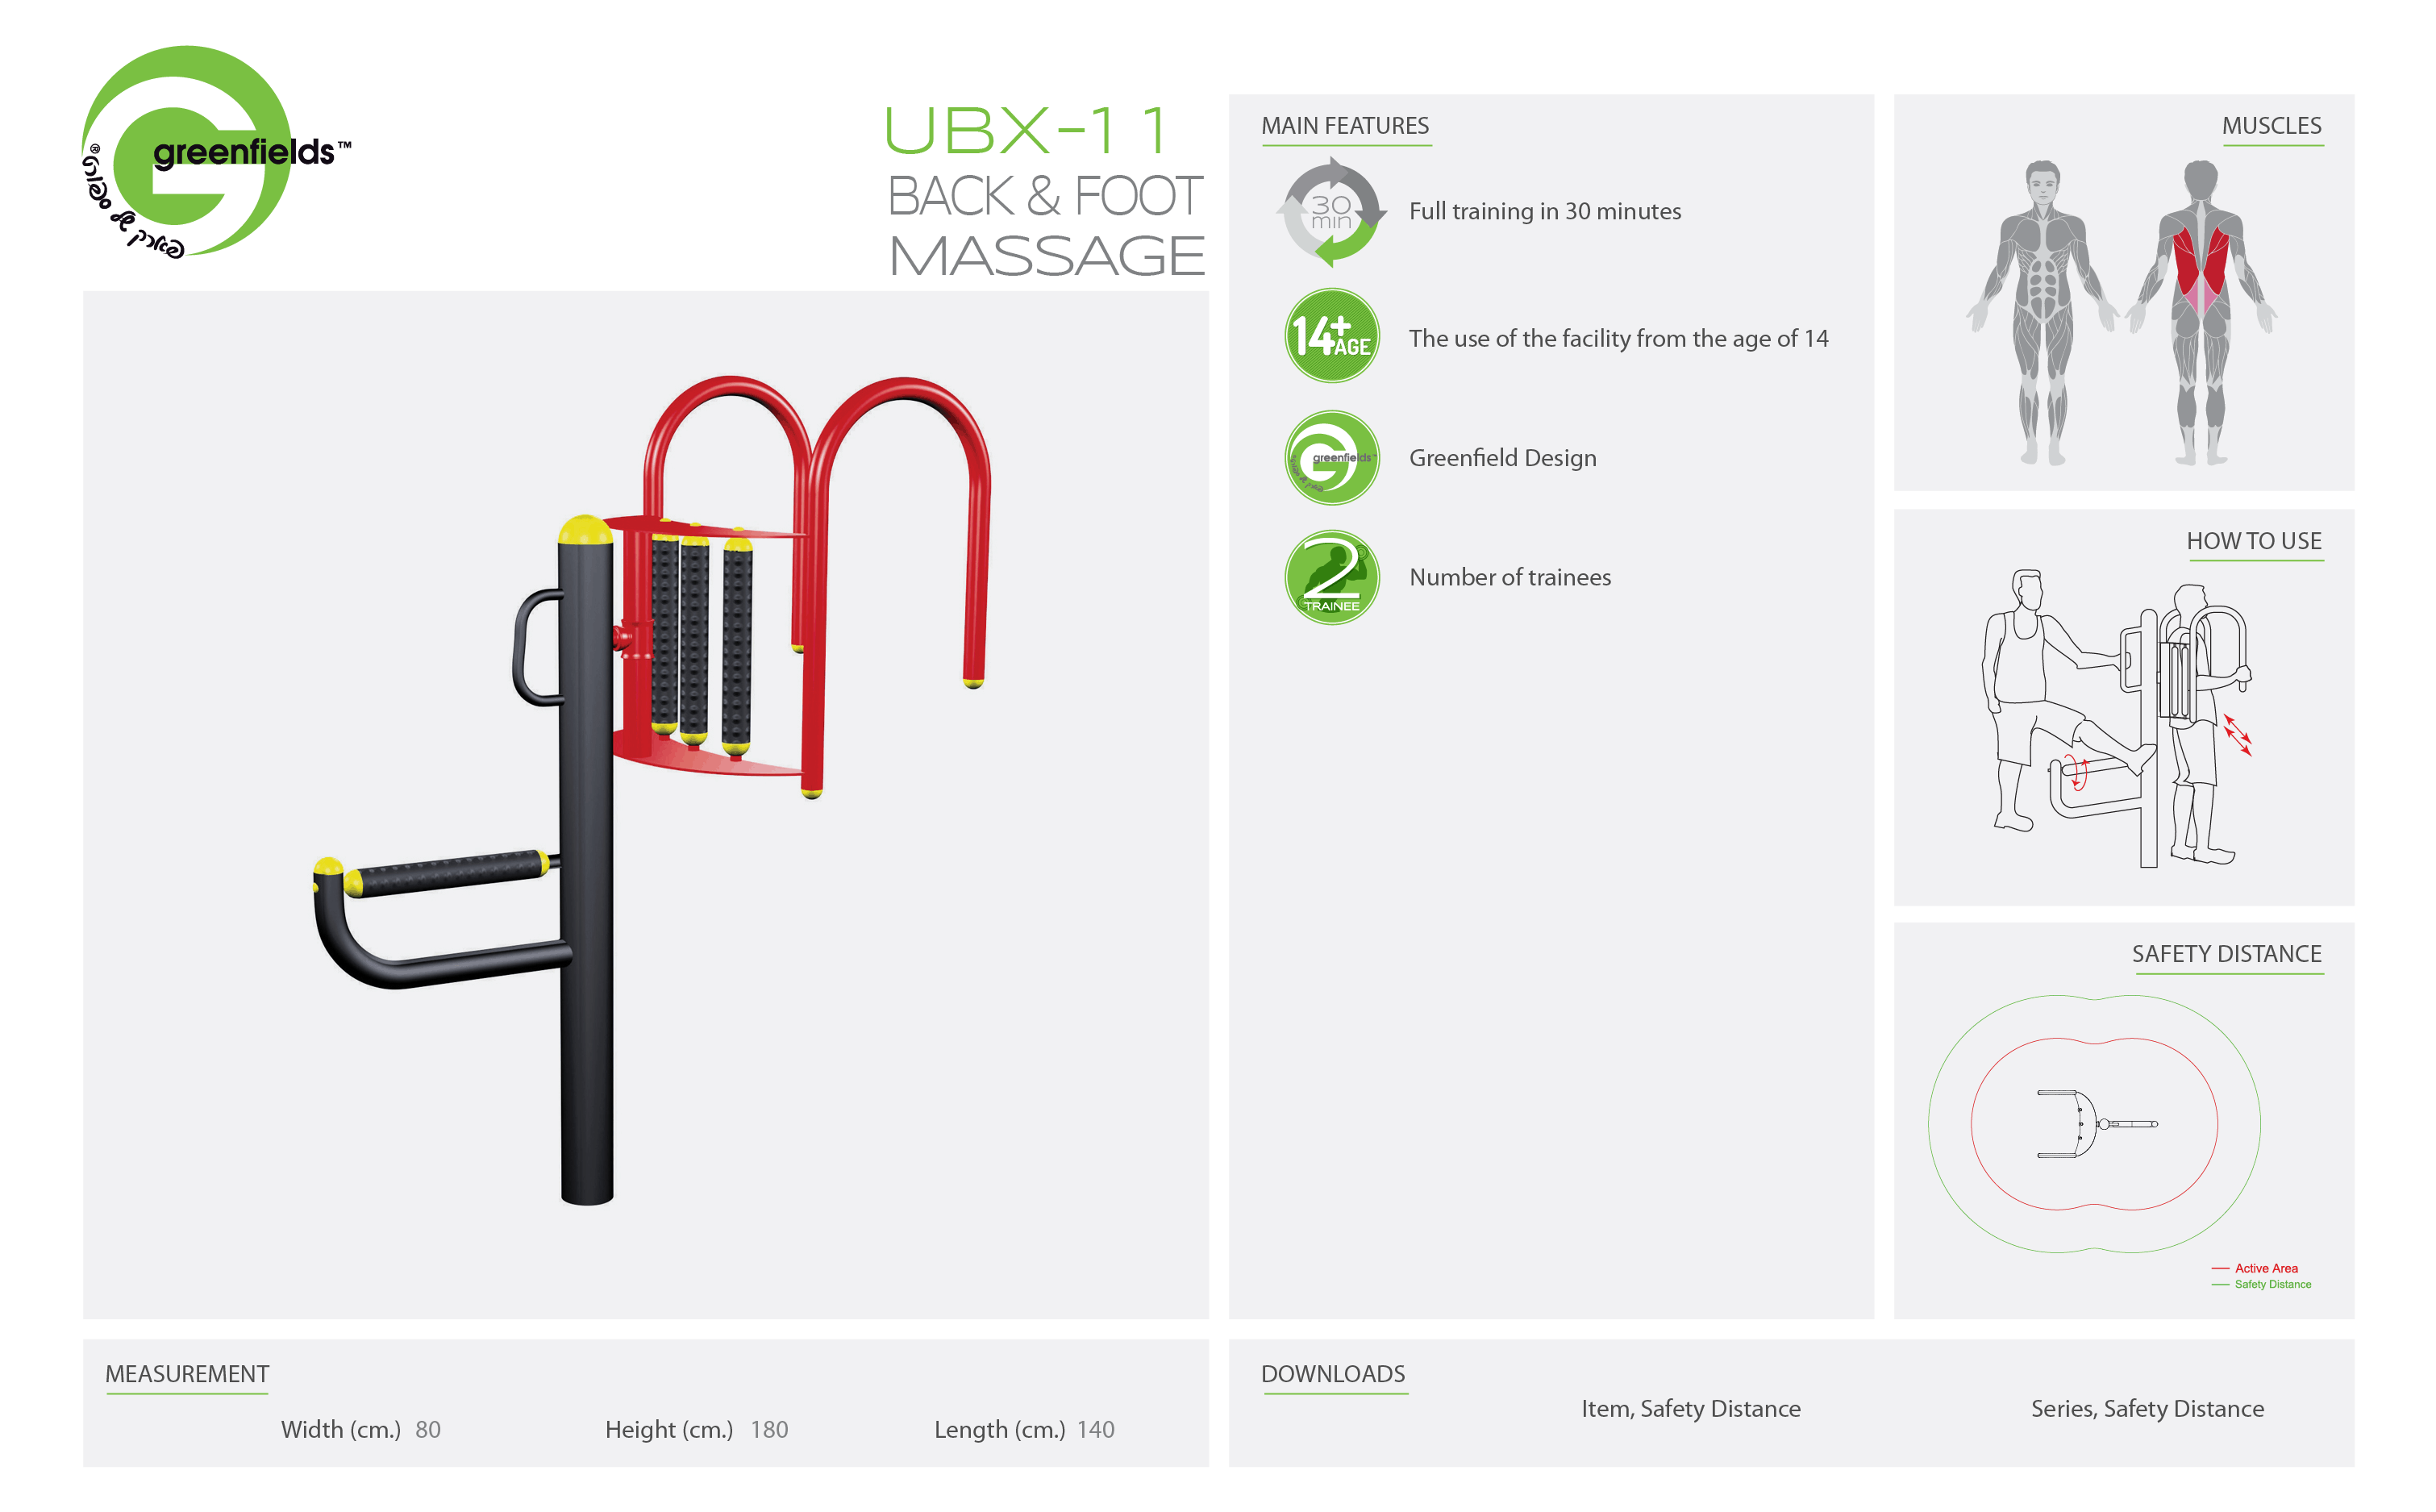 ubx-11 back and foot massage - אורבניקס - מתקן כושר - עיסוי גב וכף רגל